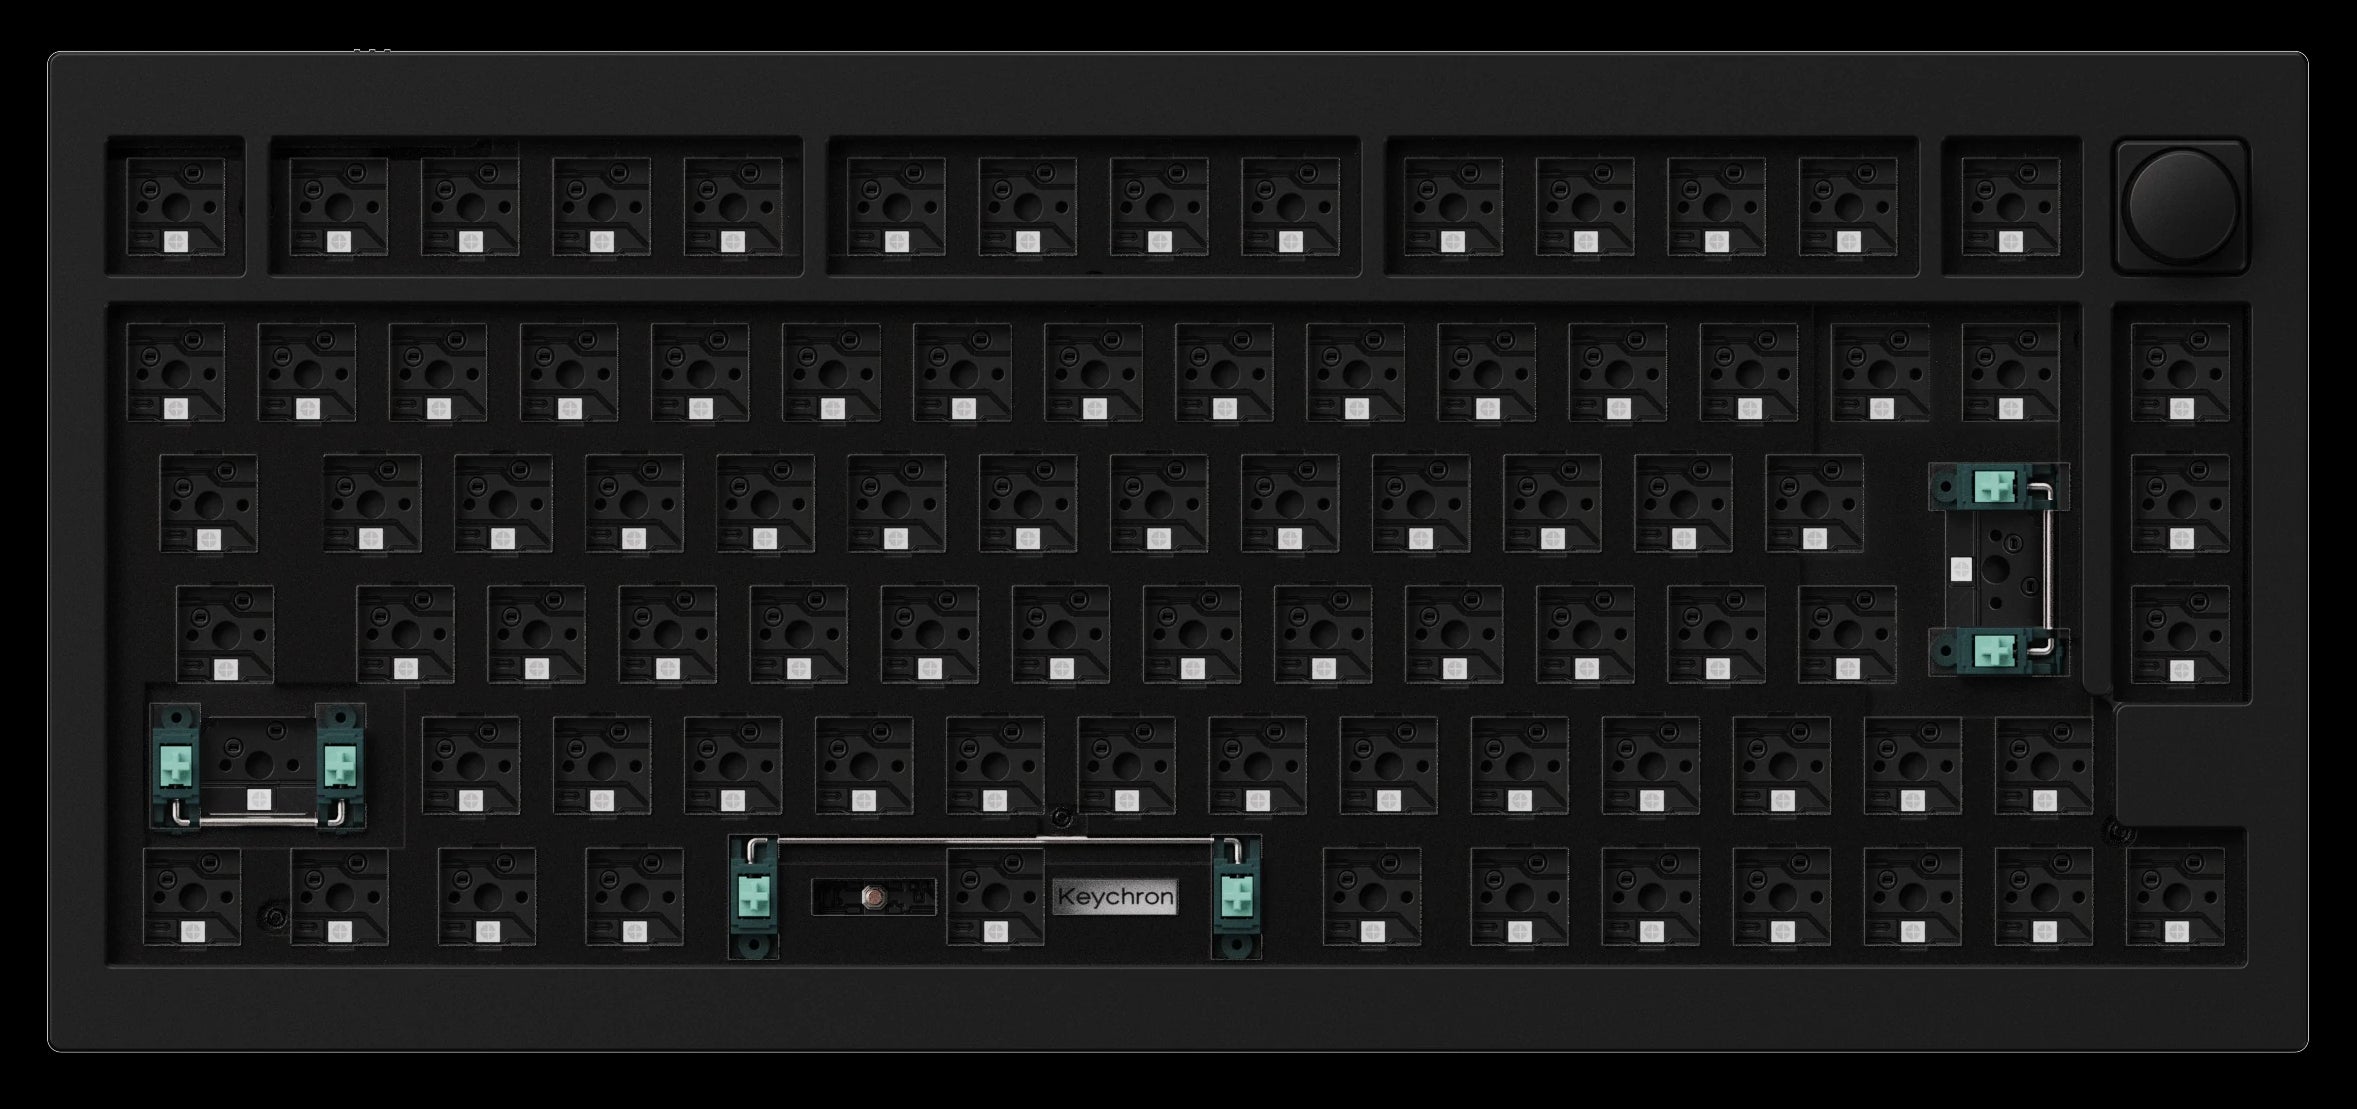 Japan JIS layout of Keychron Q1 QMK VIA 75% layout custom mechanical keyboard with rotary encoder knob version